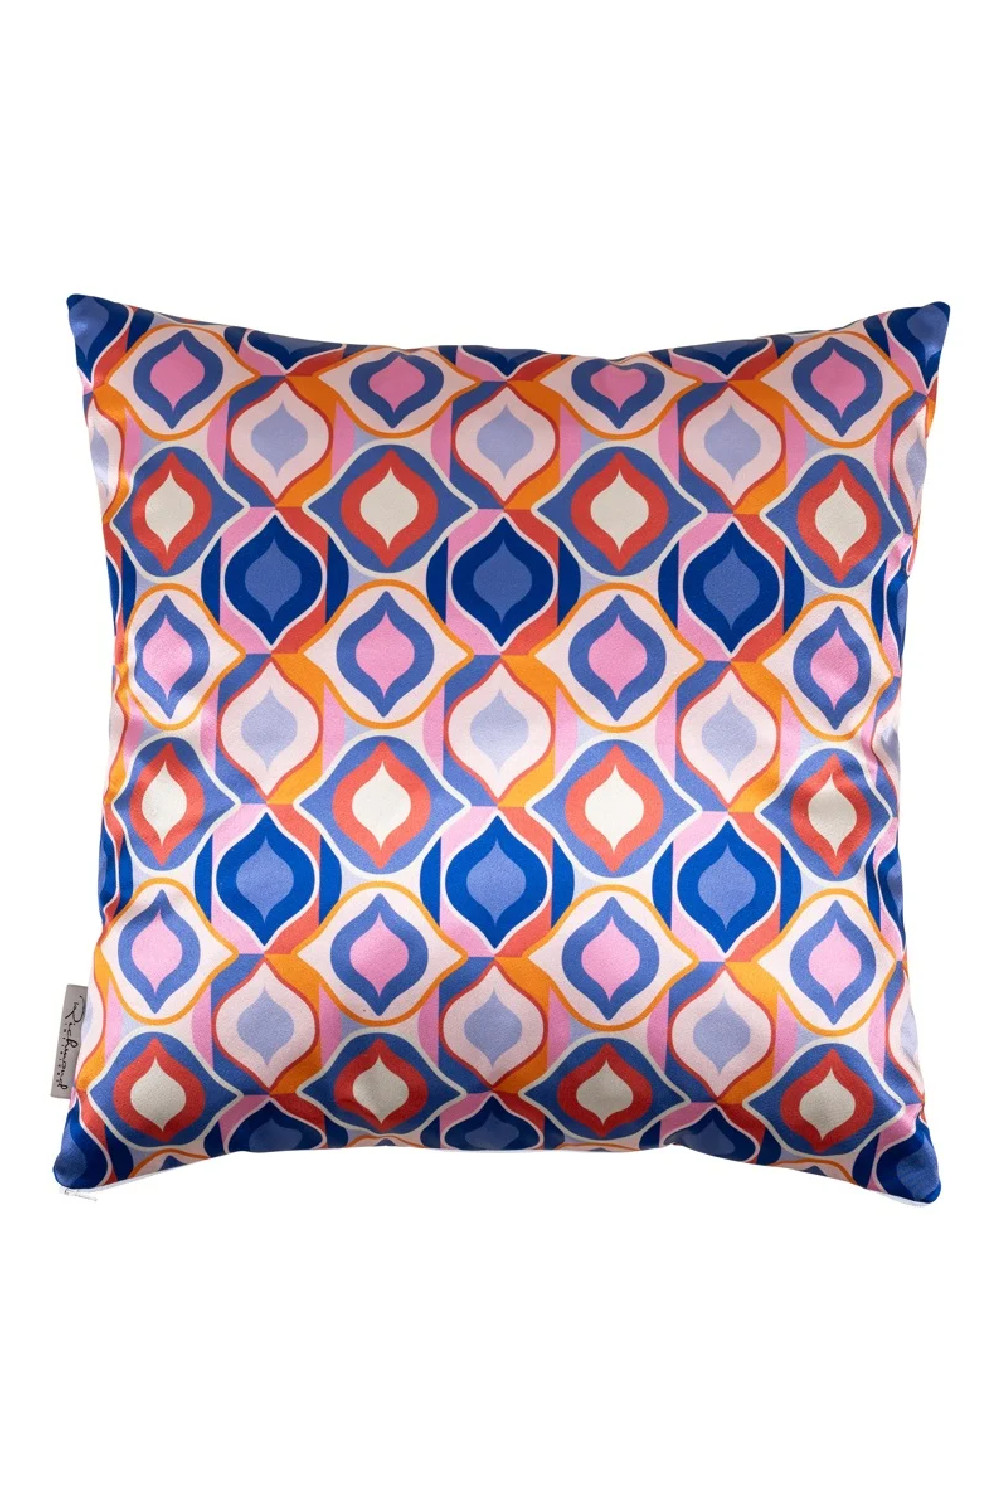 Multicolored Patterned Pillow | OROA Myla | Oroa.com